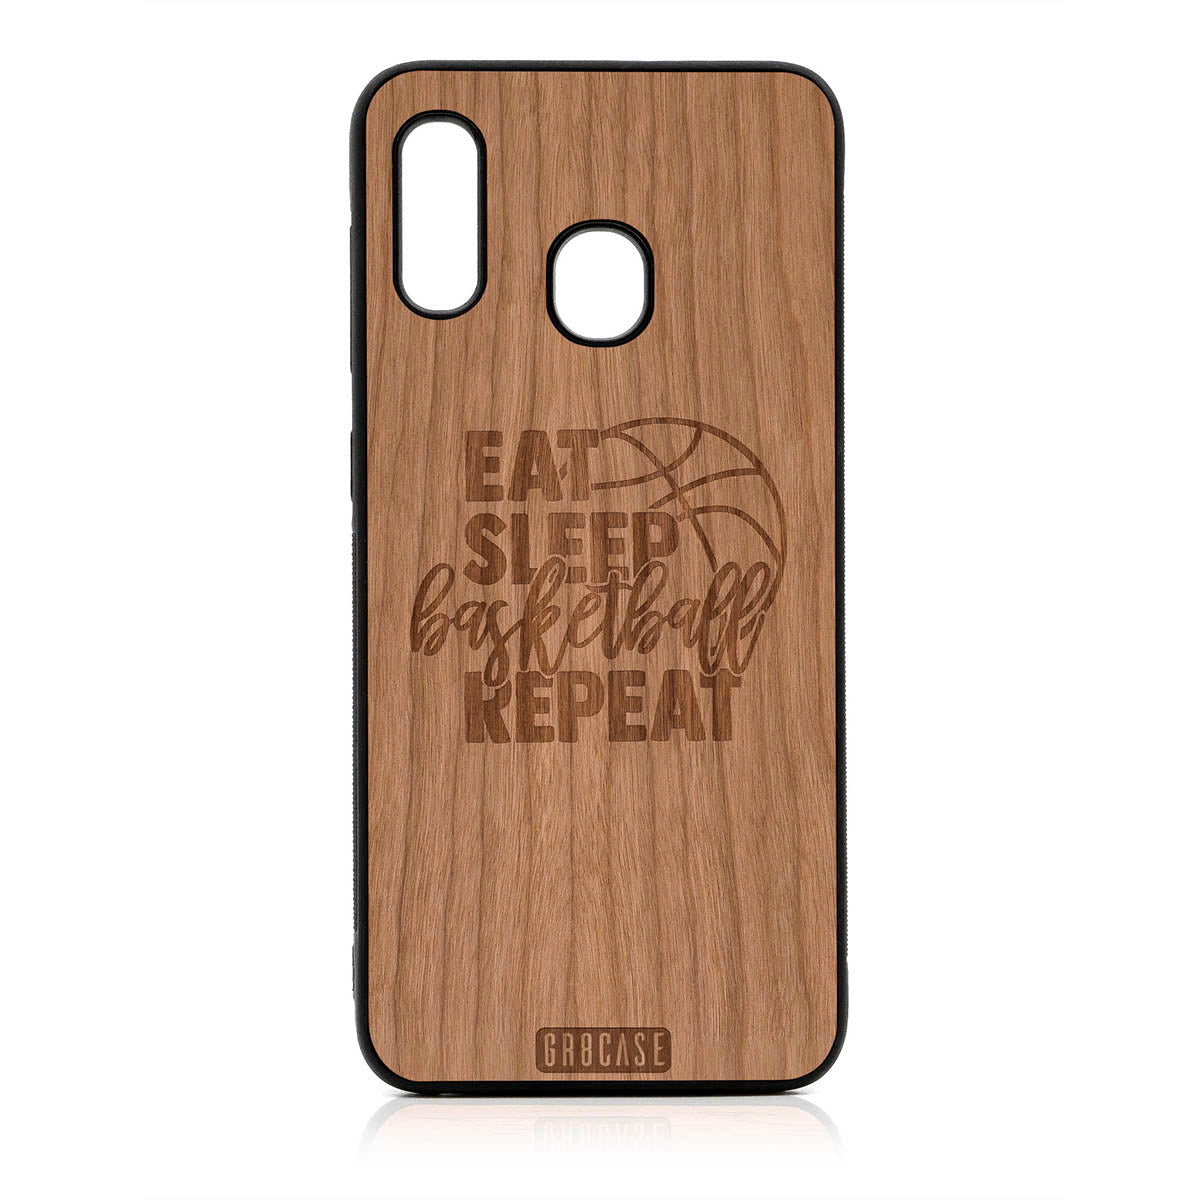 Eat Sleep Basketball Repeat Design Wood Case For Samsung Galaxy A20